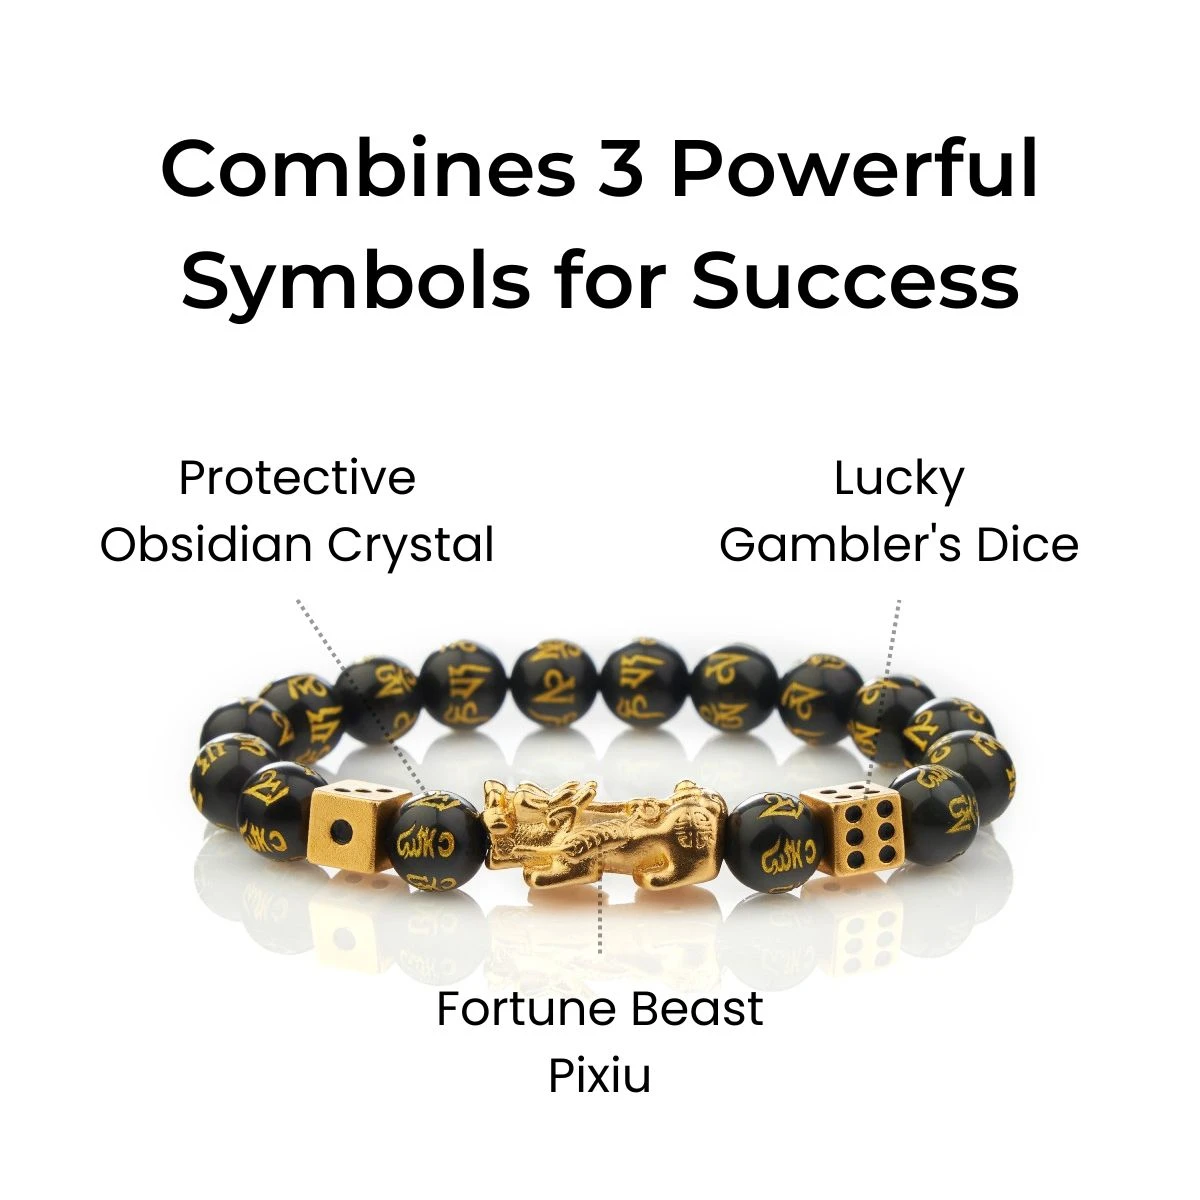 Debt Relief & Gambling Pixiu Bracelet - Combines 3 Powerful Symbols for Success